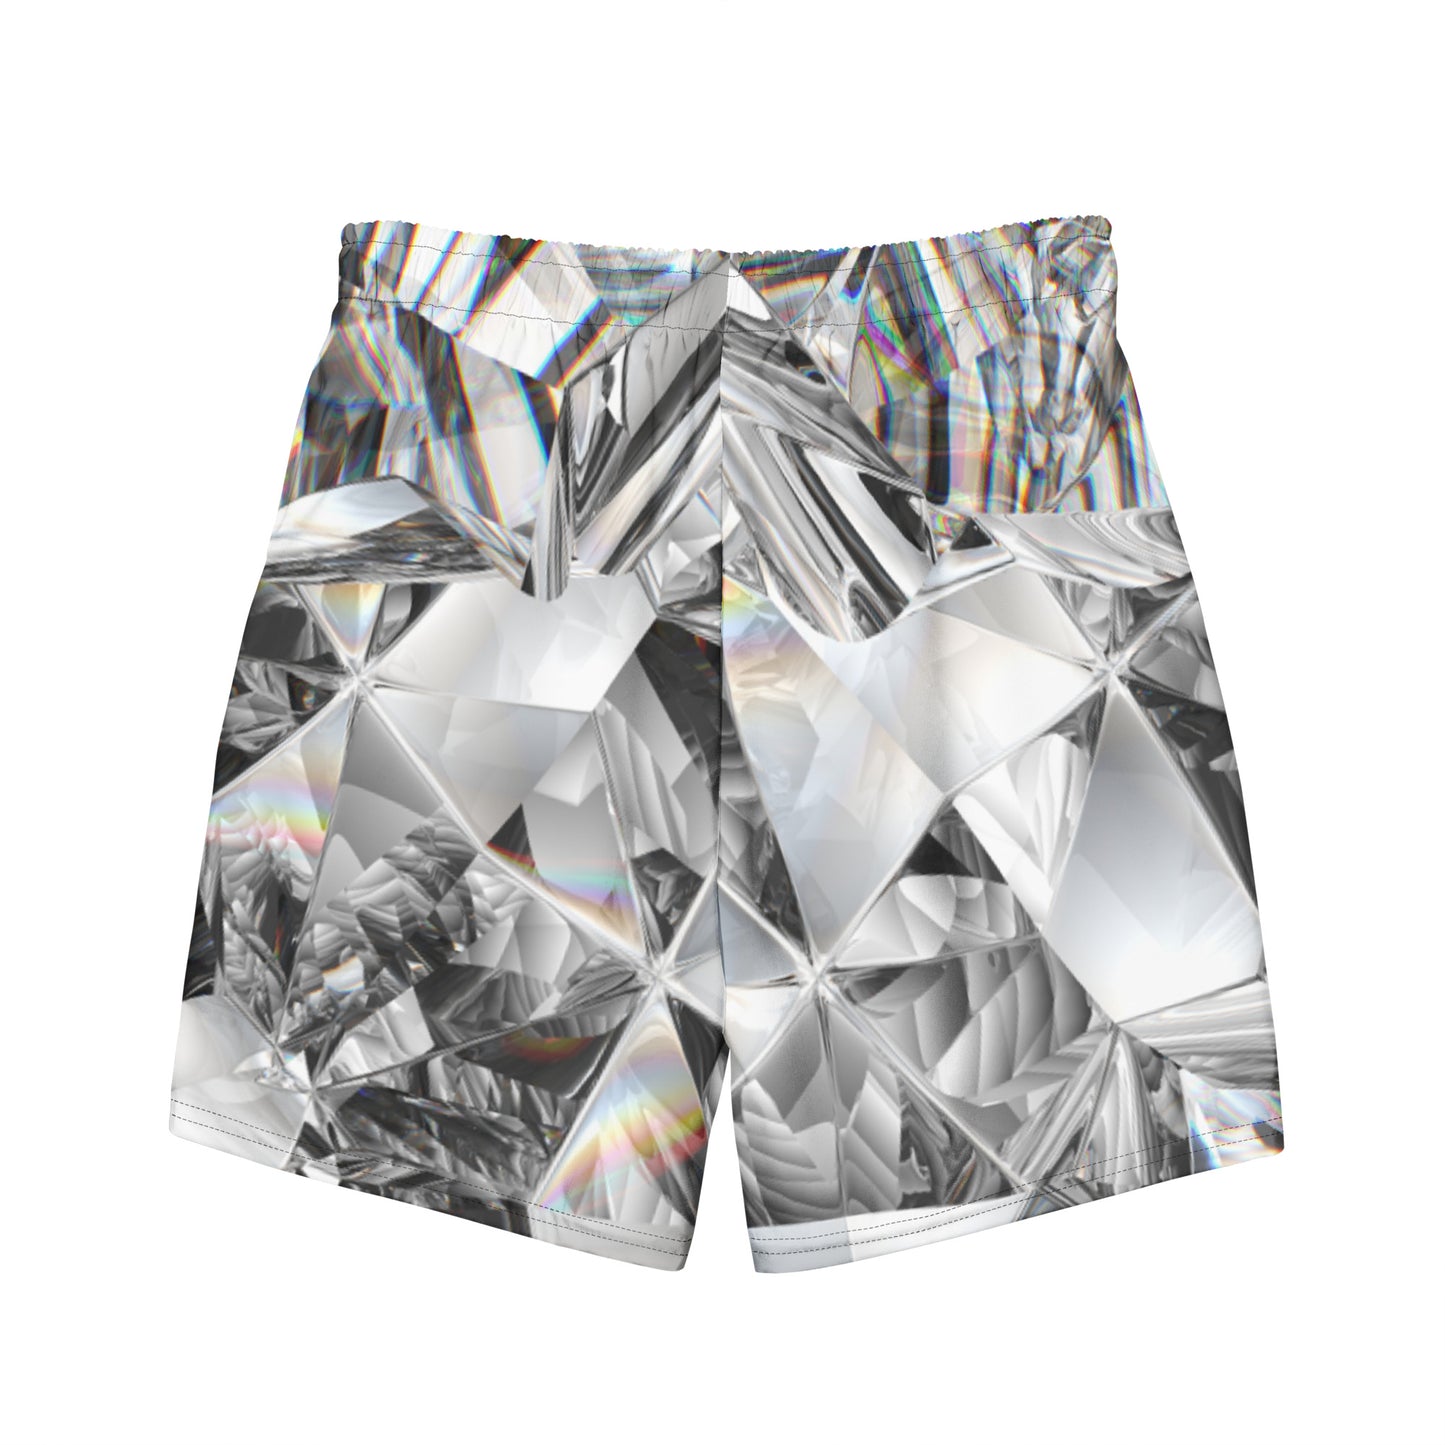 Diamond All Over Print Swim Trunks Bathing Suit Shorts